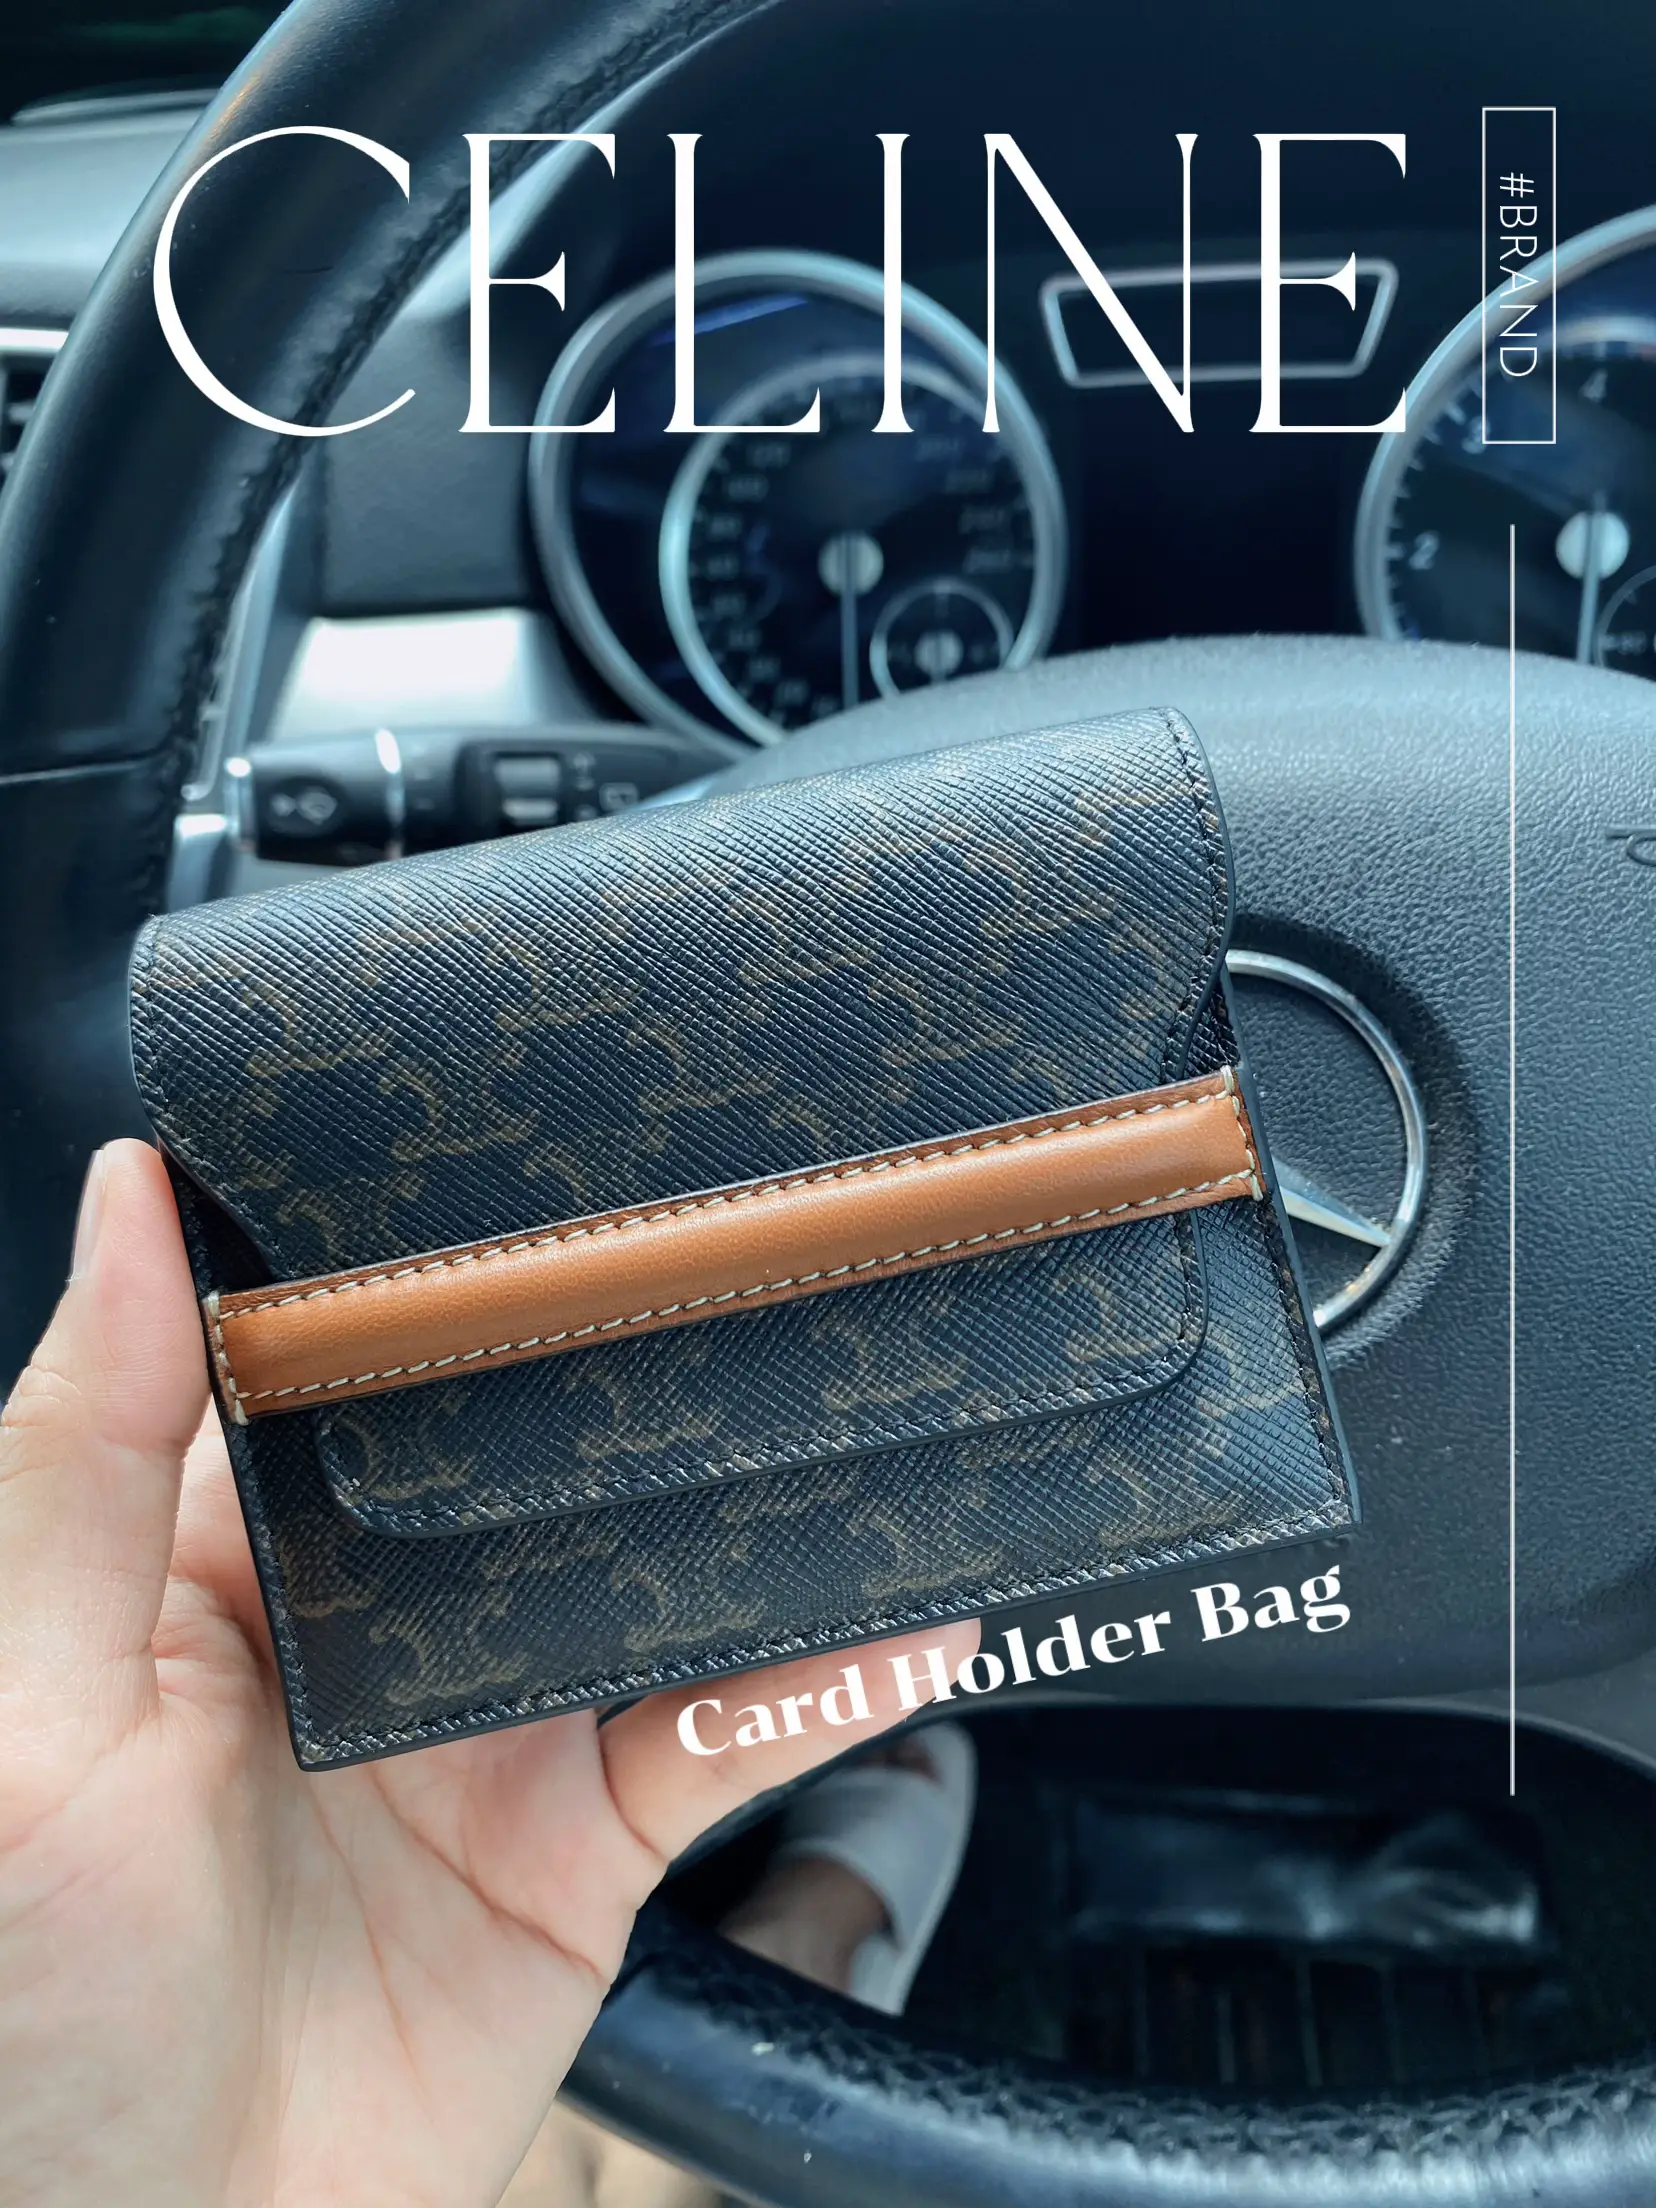 In my Celine era with my new Mini Besace Triomphe bag : r/handbags